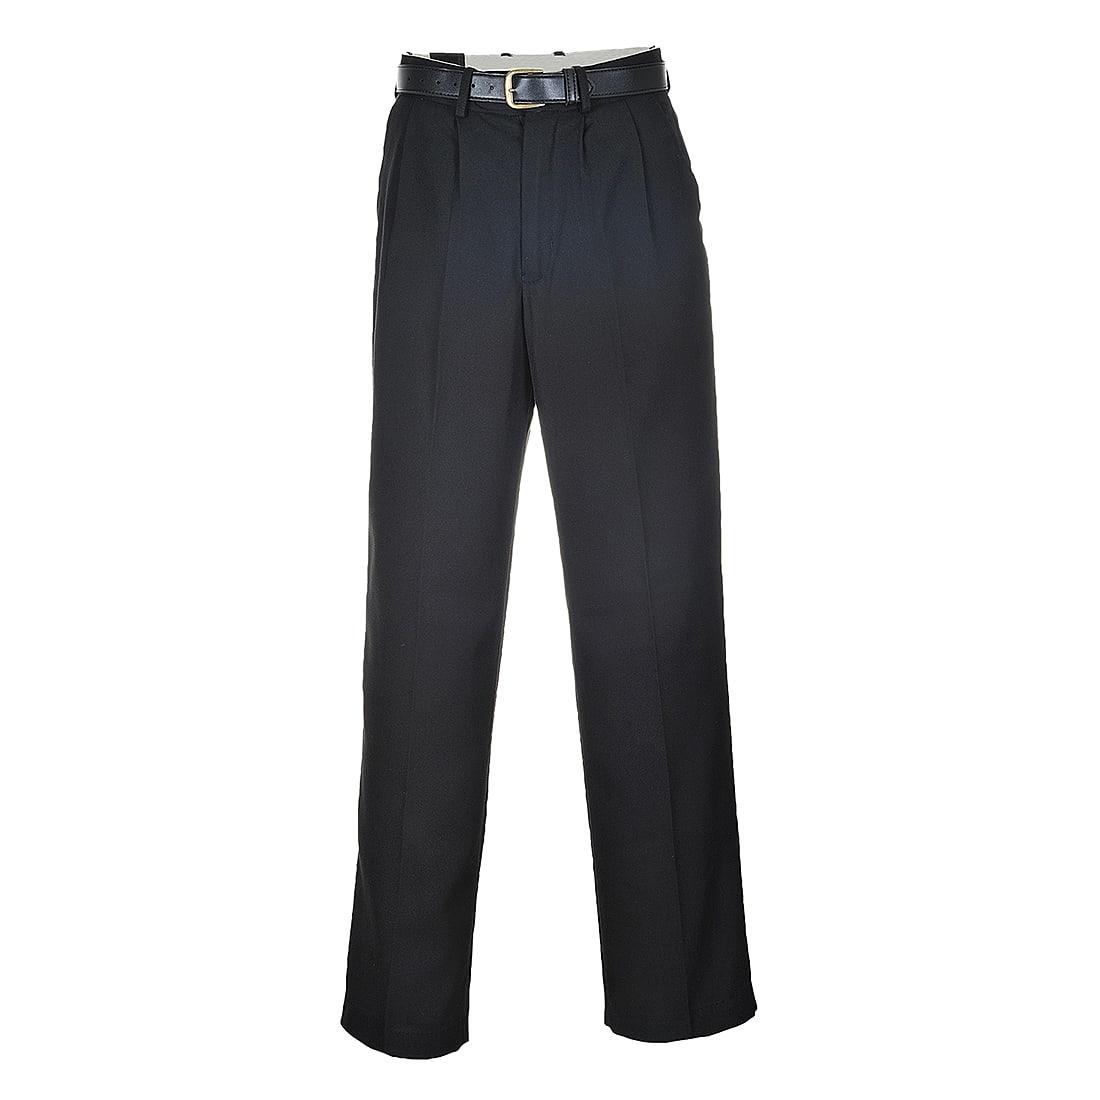 PortWest Mens London Trousers Black Regular/Tall Various Size S710 